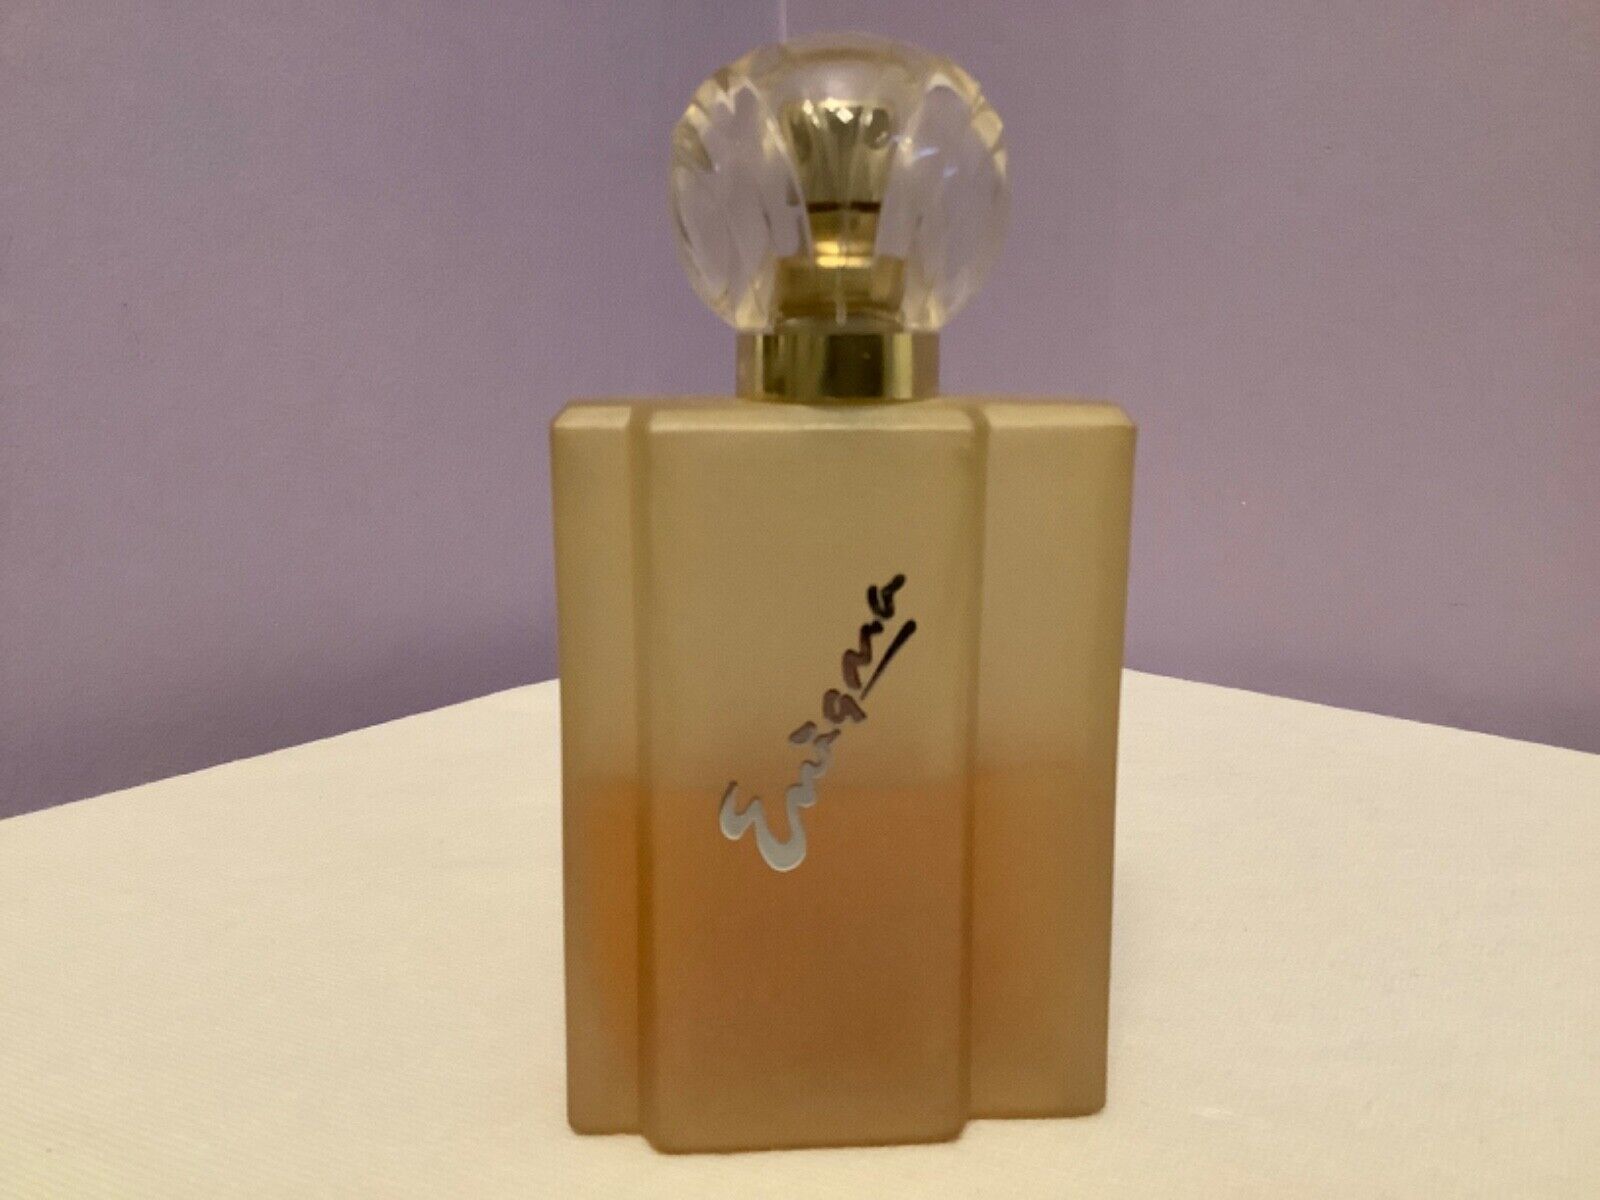 Enigma Essence Mist spray 1.7 oz Perfume by AdeM Vintage Alexandra de Markoff